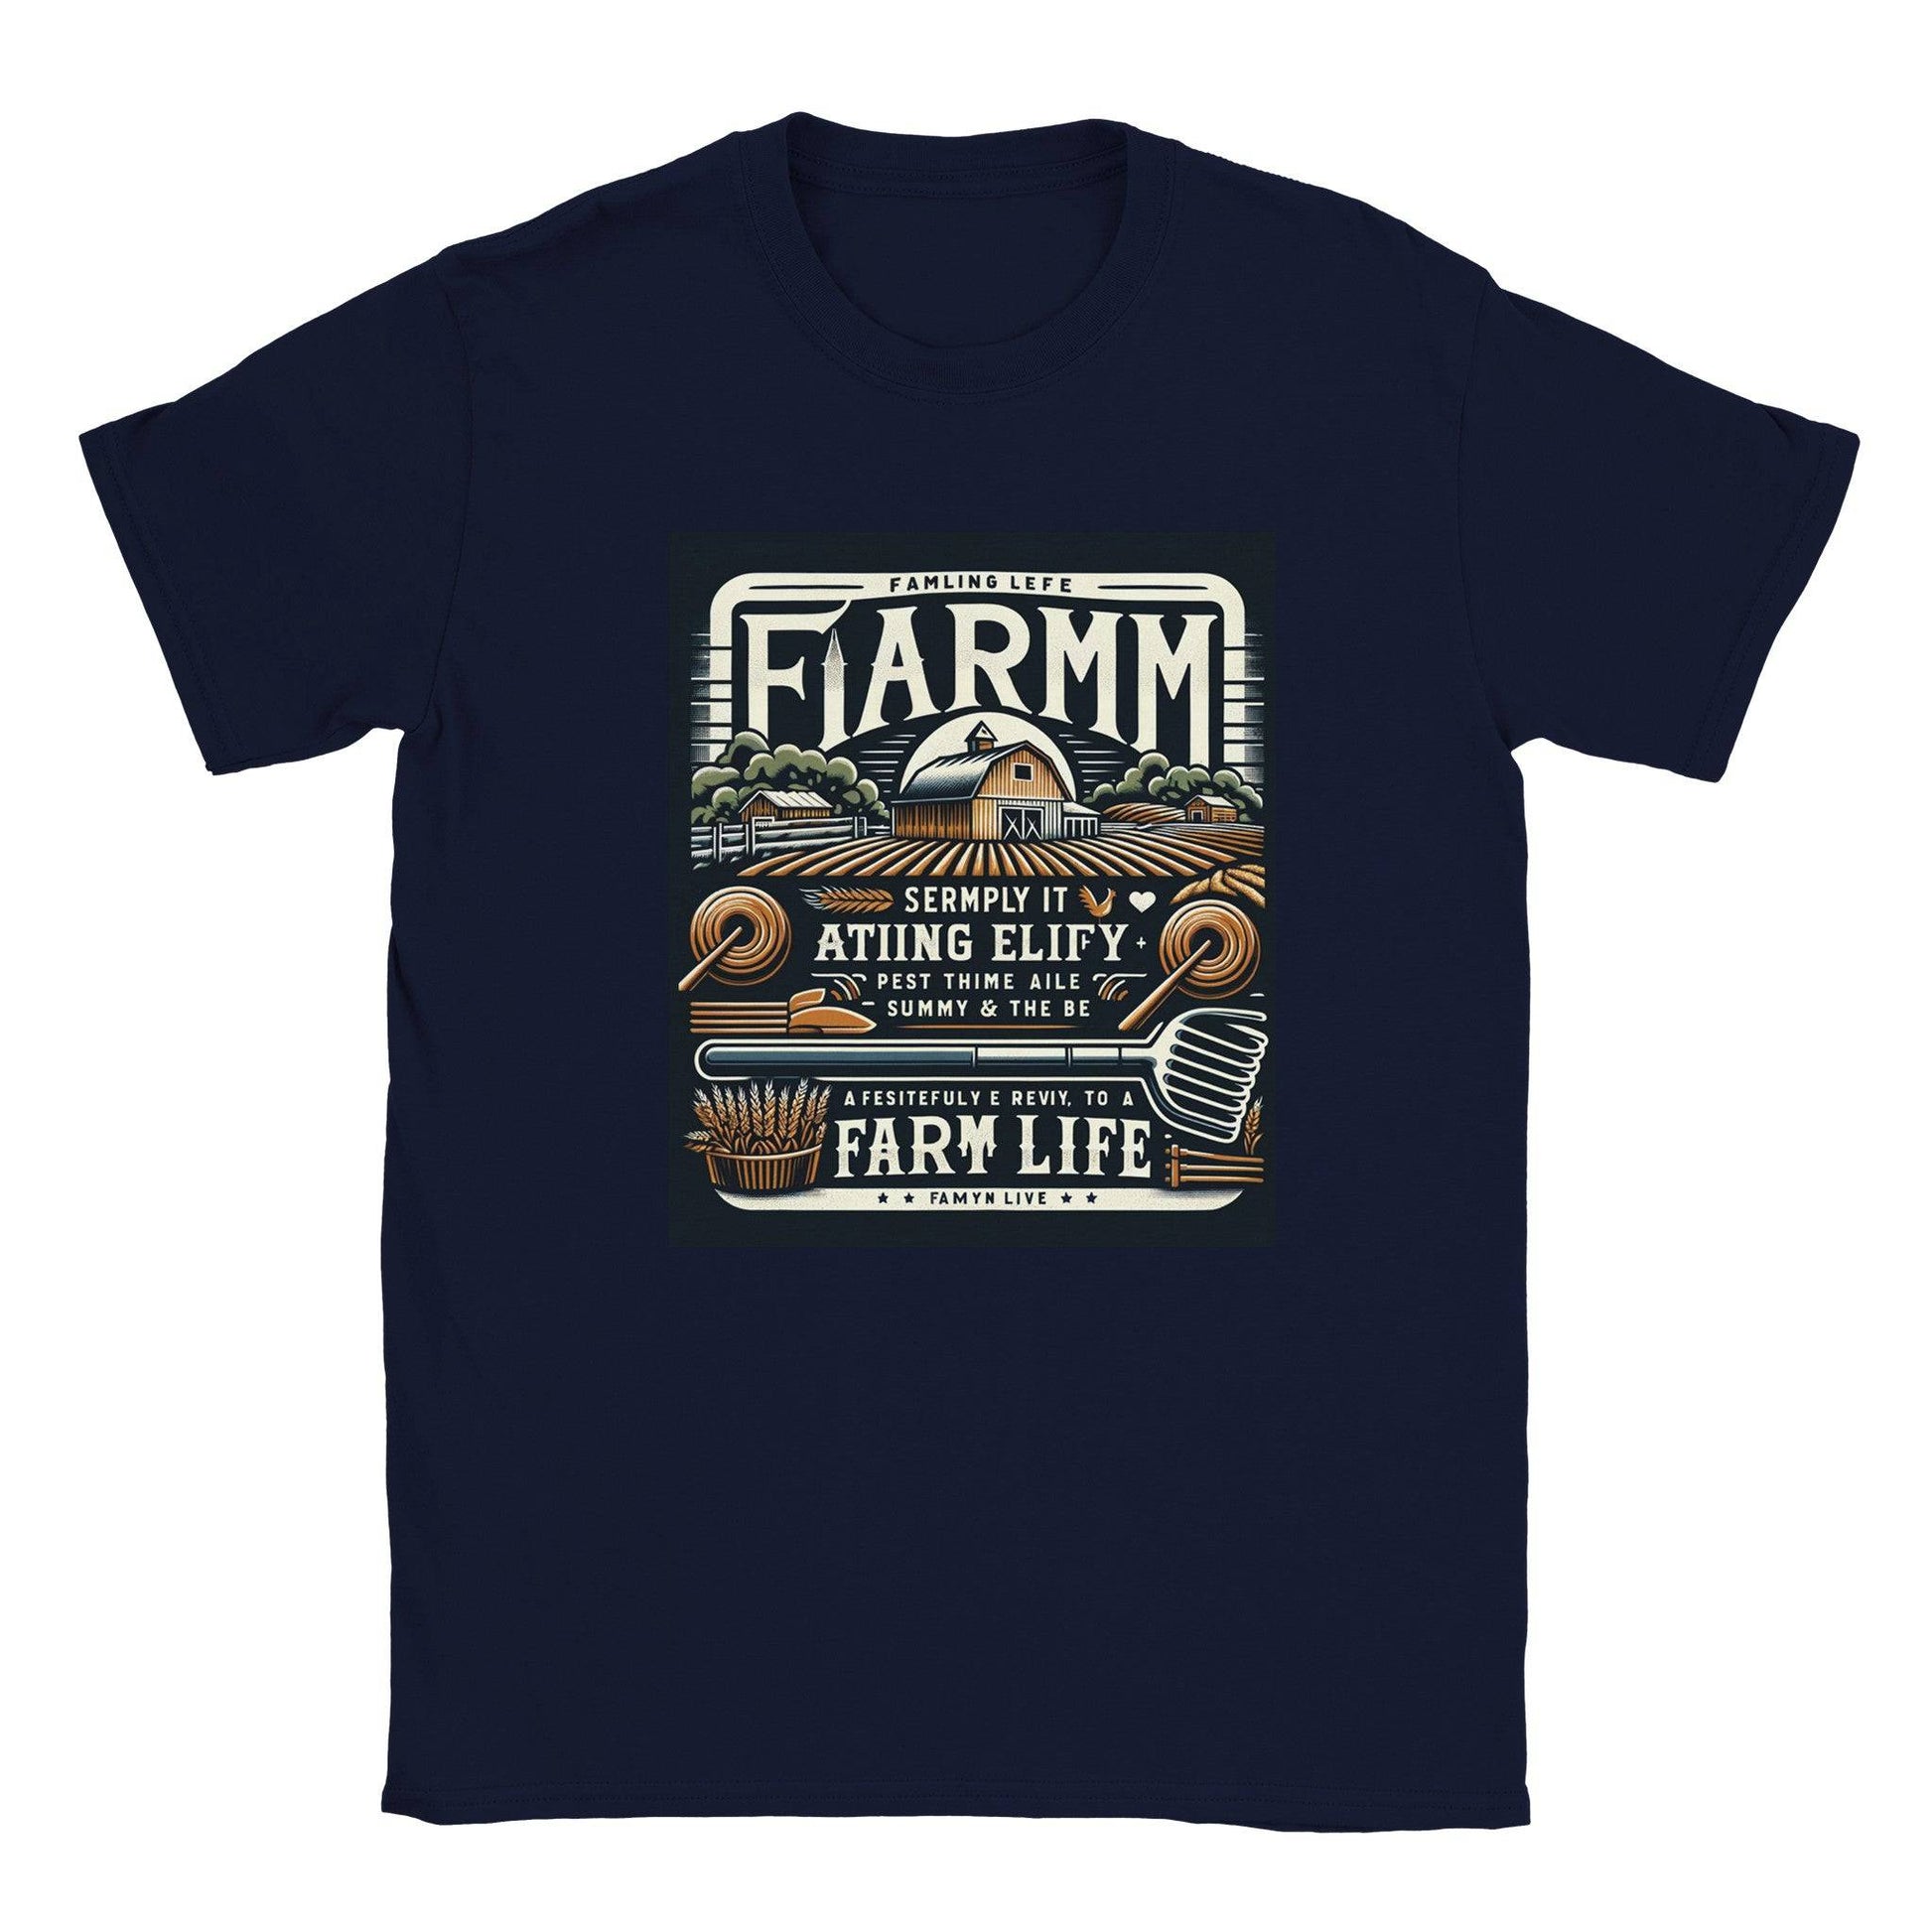 Classic Crewneck "Country Life" Farm T-Shirt - 100% soft, breathable cotton - BeinCart